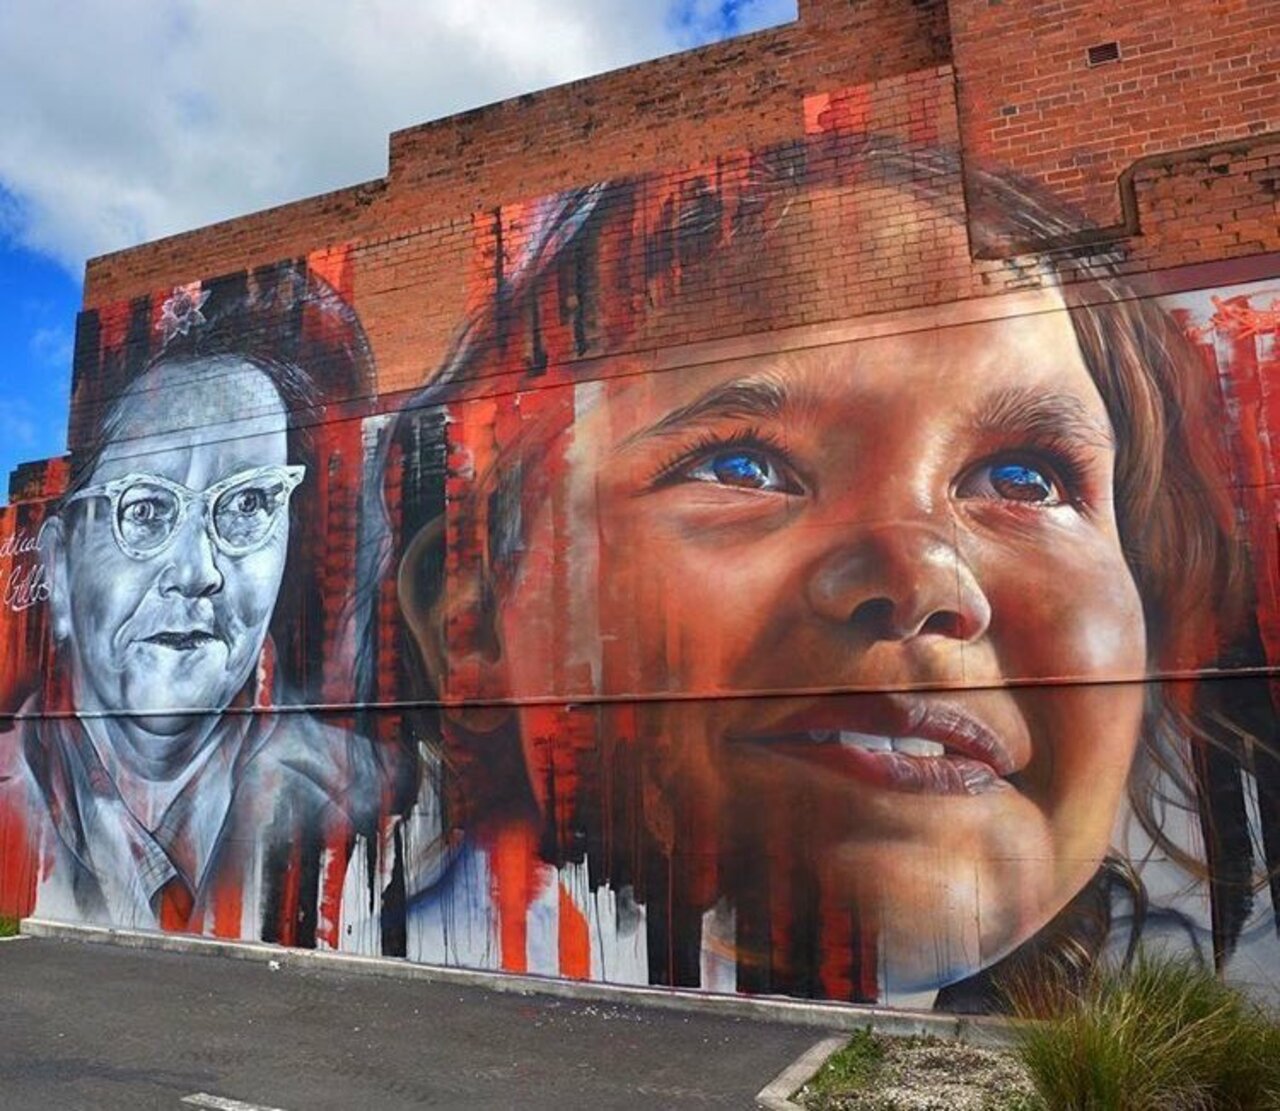 #mural by Adnate #Dubbo #NSW #Australia #art #graffitti #streetart #urbanart https://t.co/Sc44nPNEex